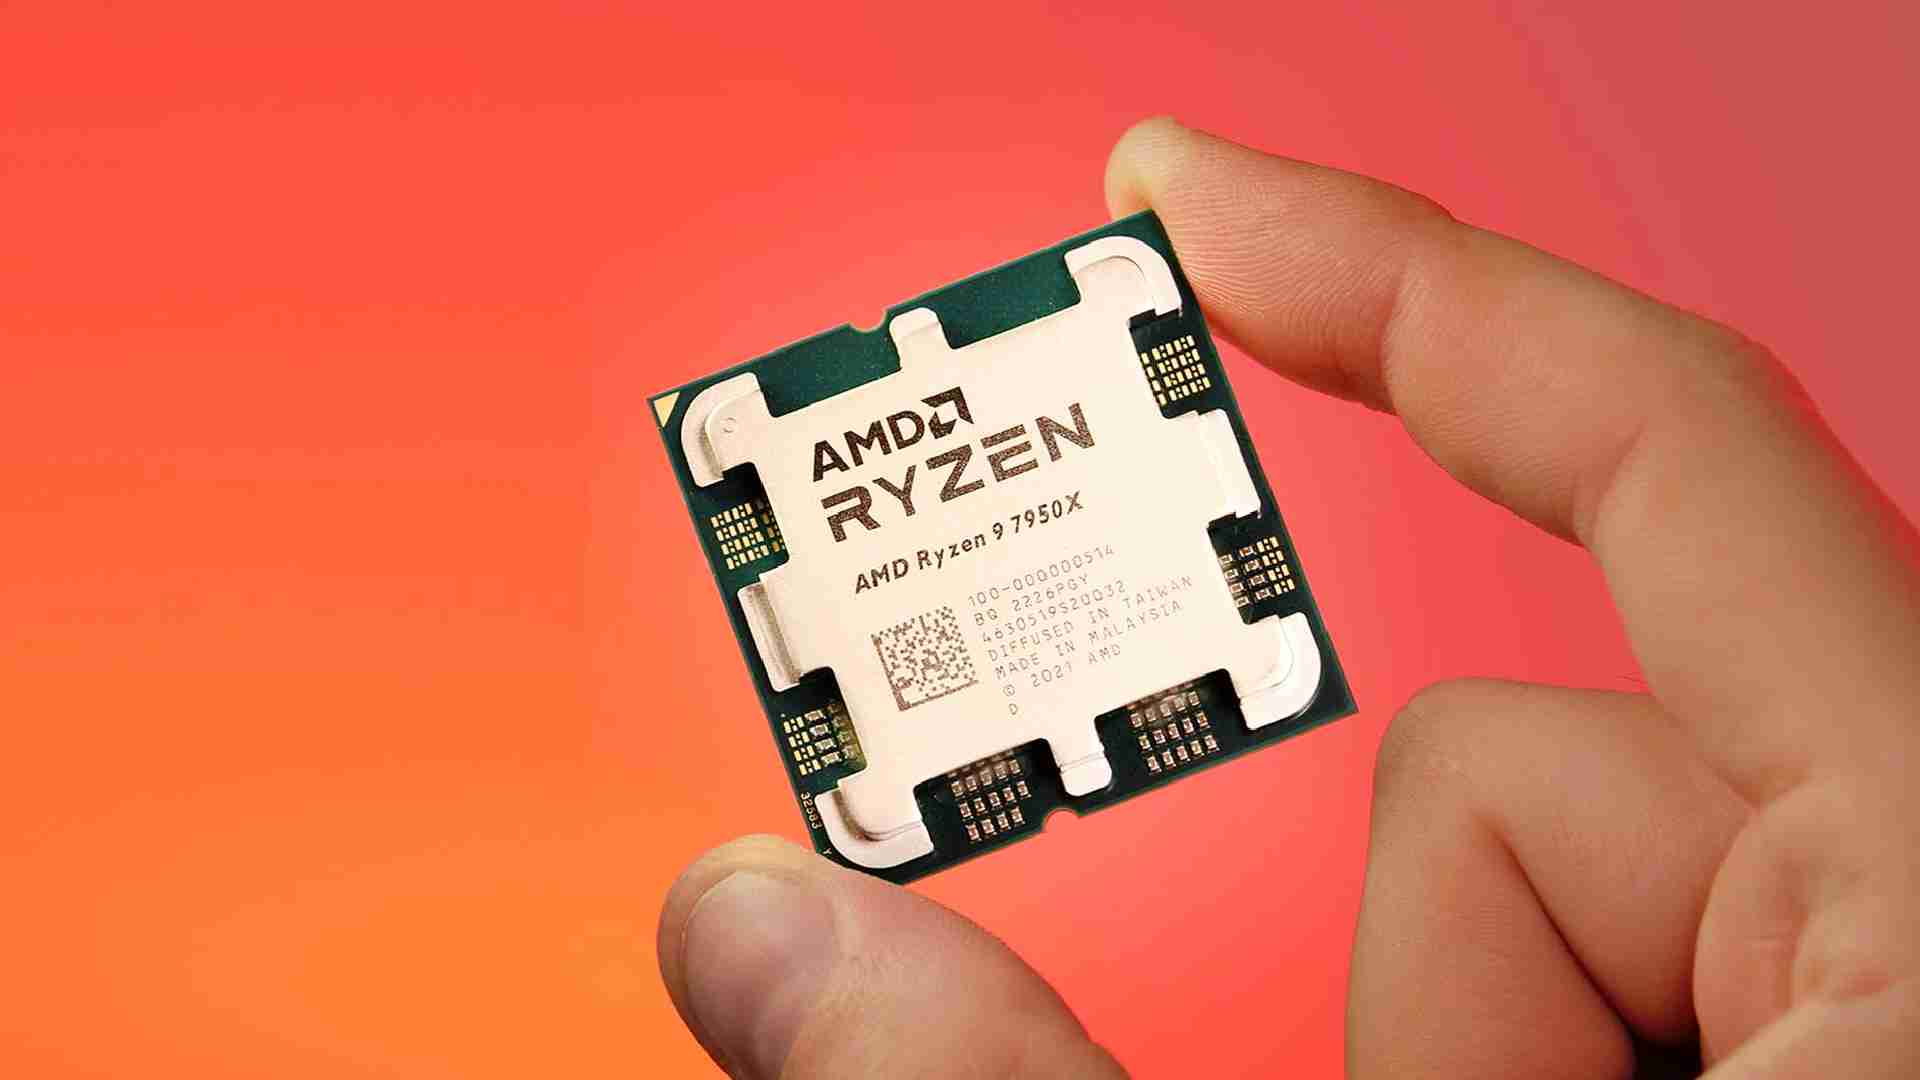 AMD Ryzen 7950X Review